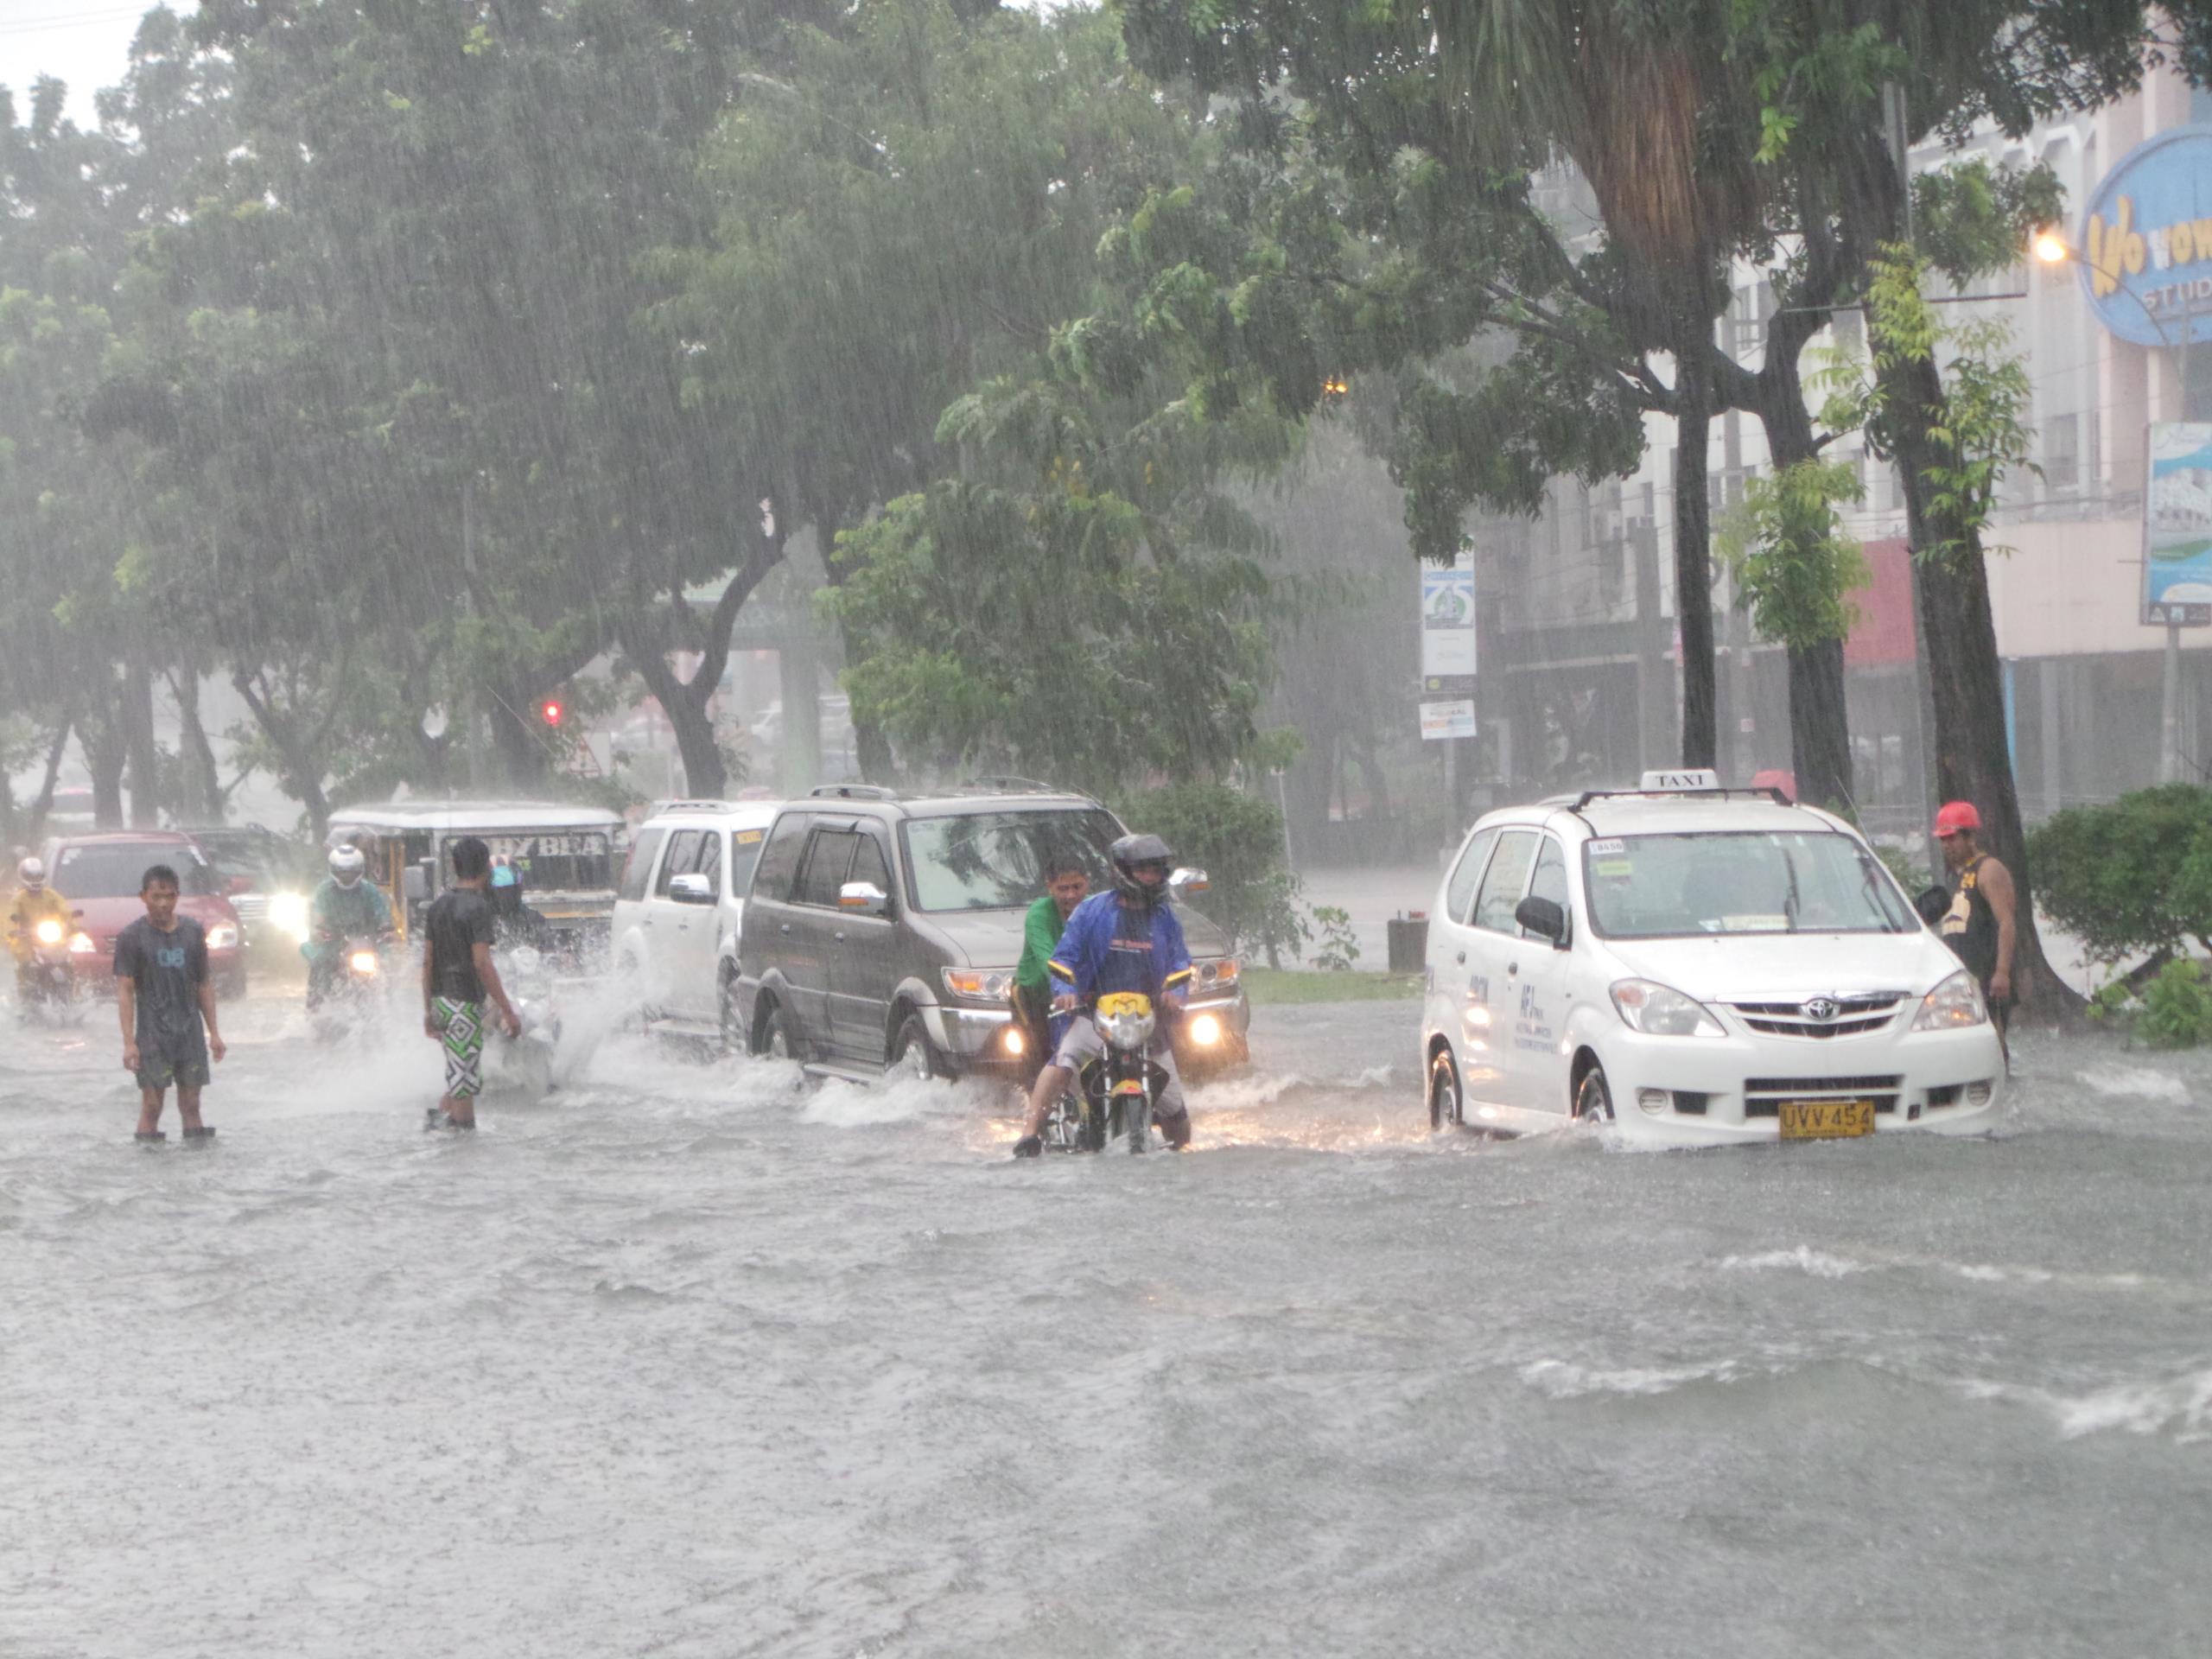 Flooding in Quezon City, Philippines